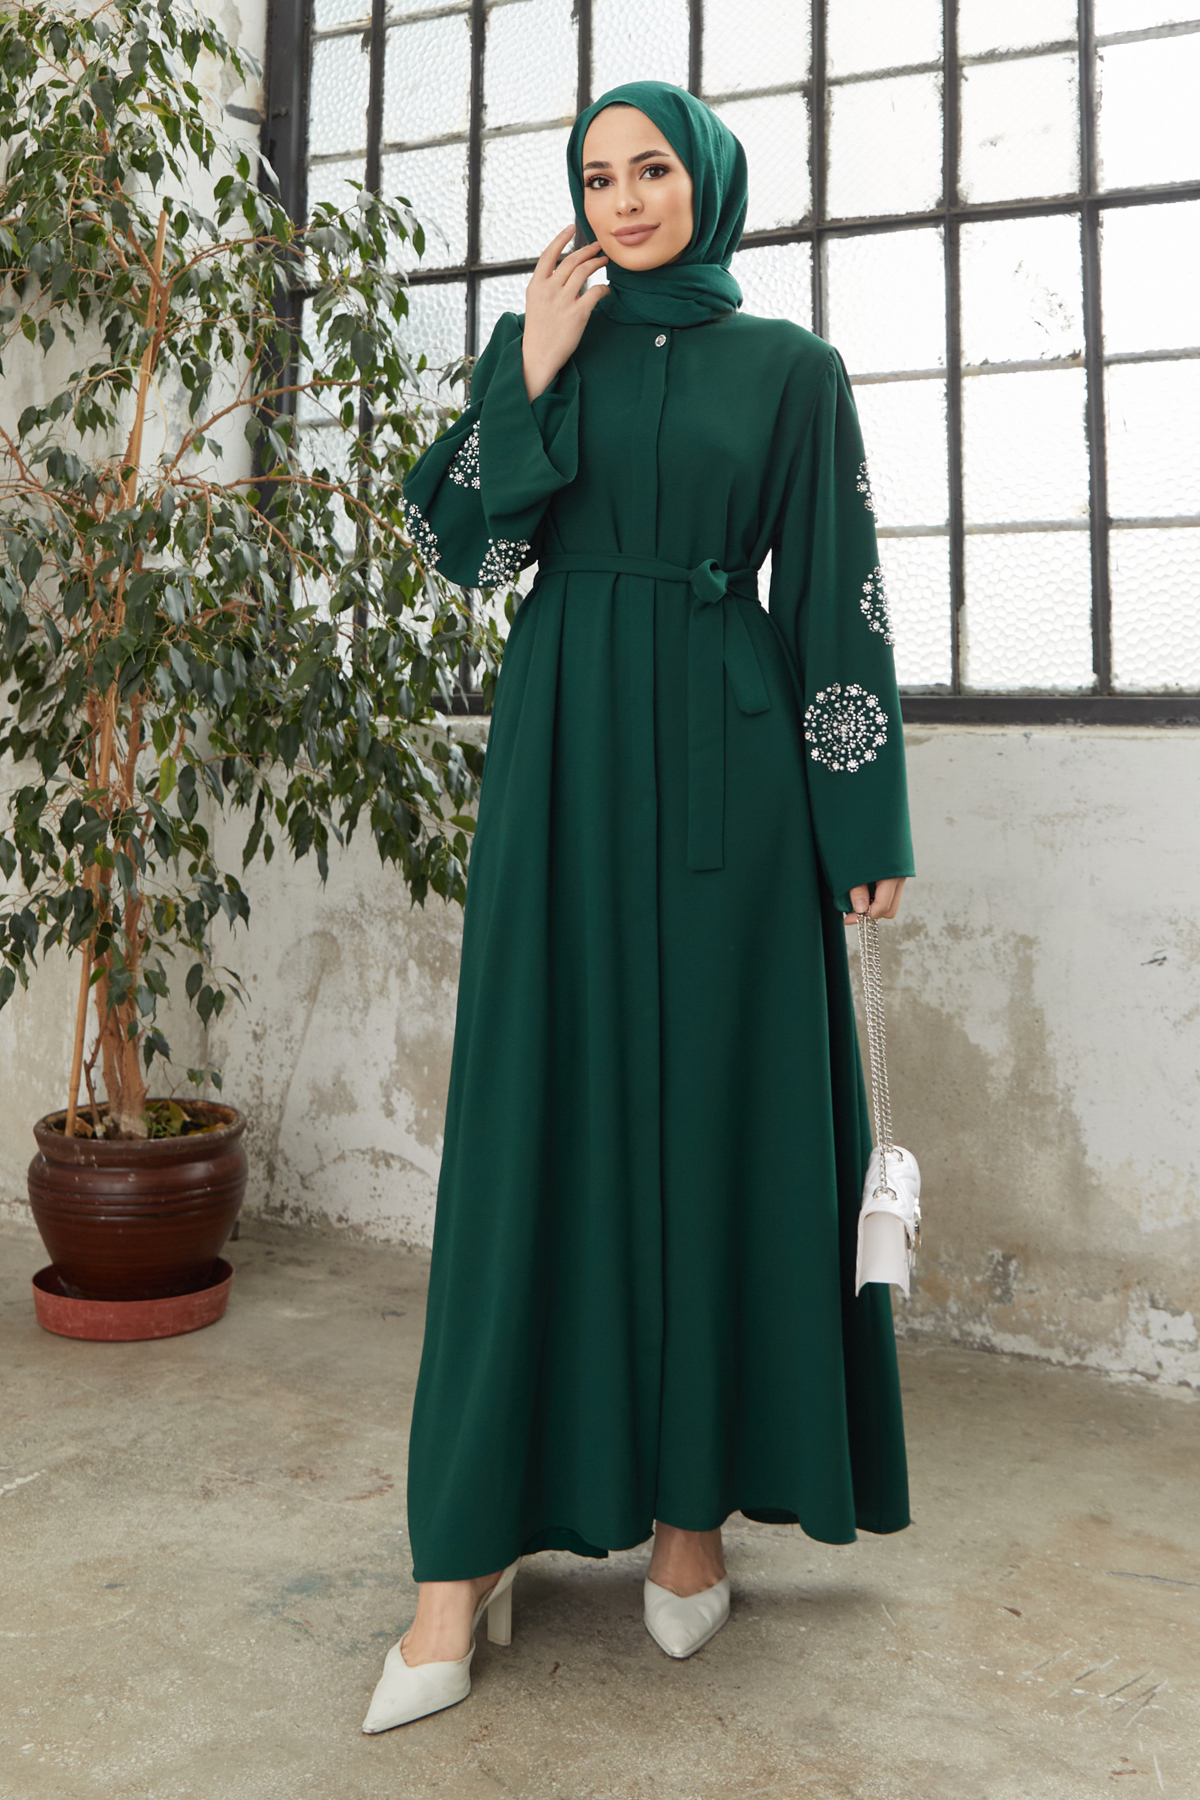 Liva Arms Stone Abaya - Emerald